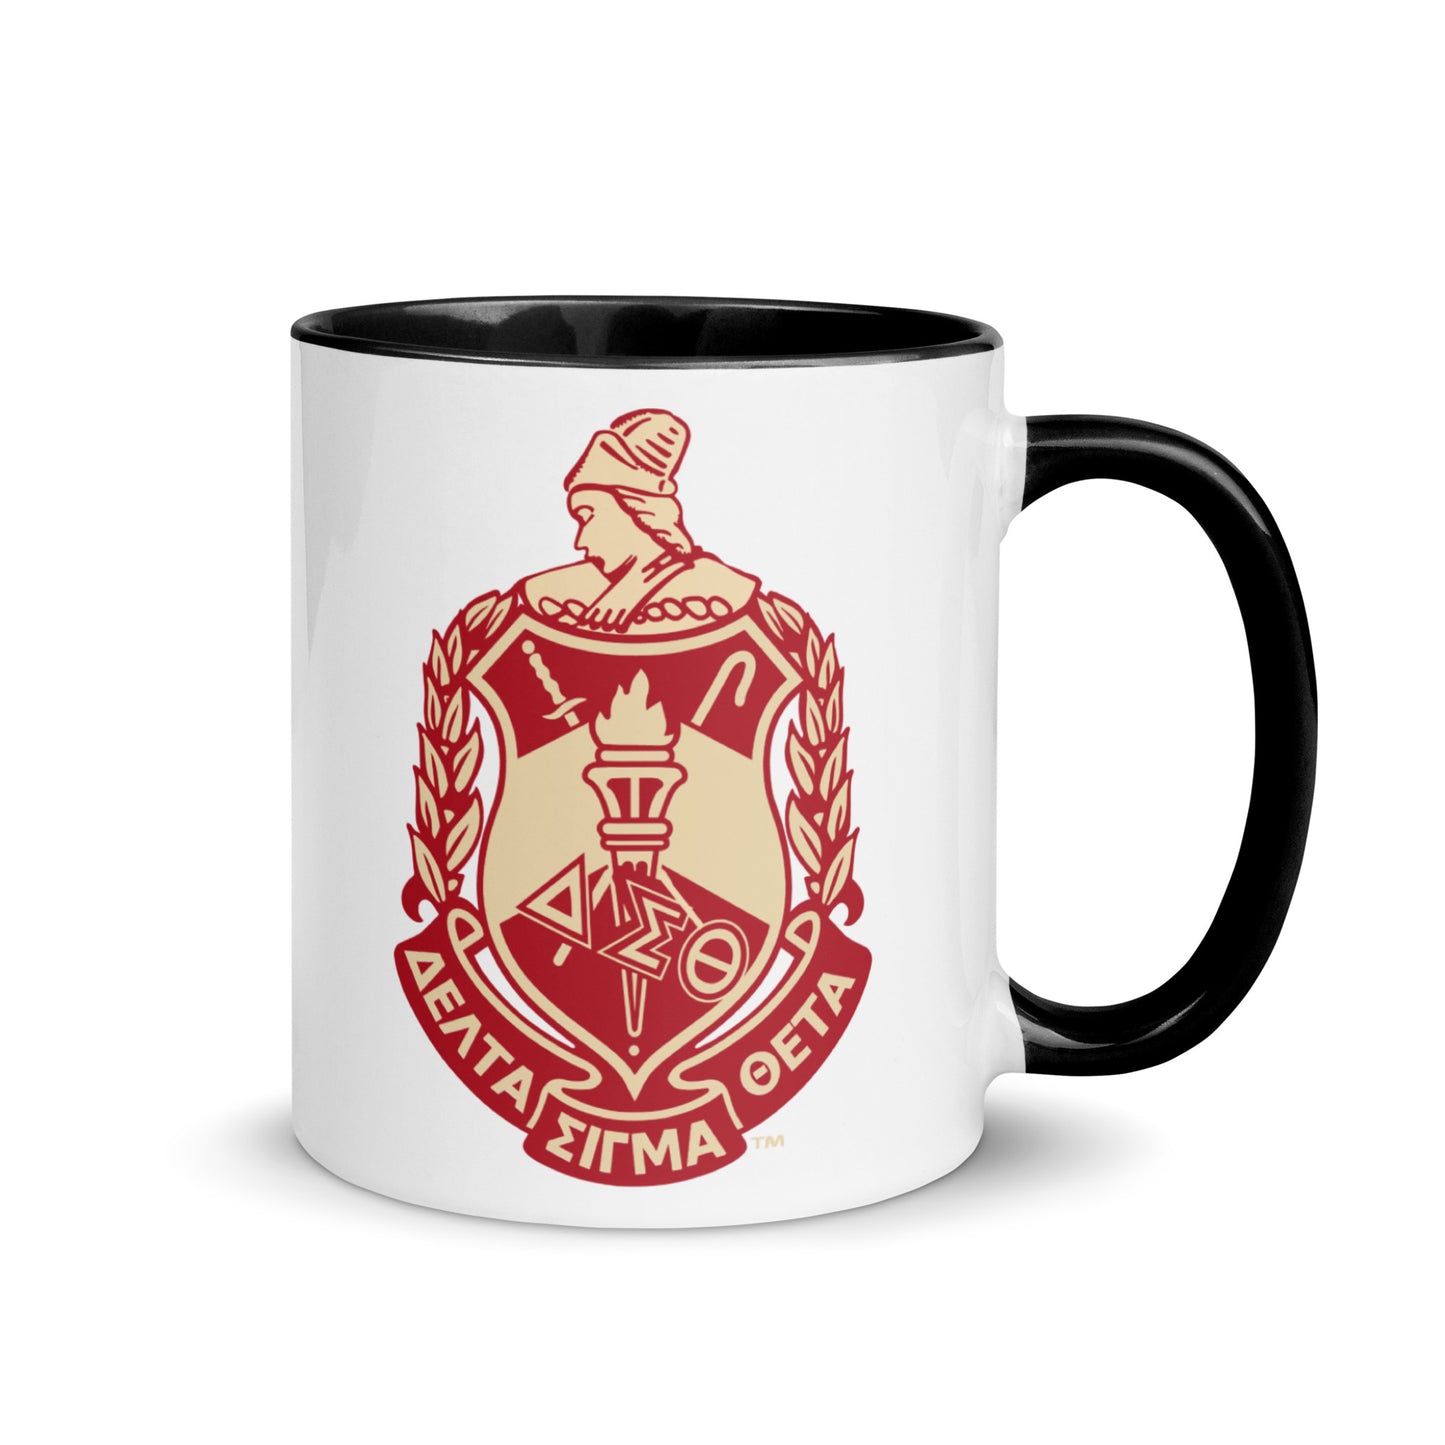 Delta Crest Mug